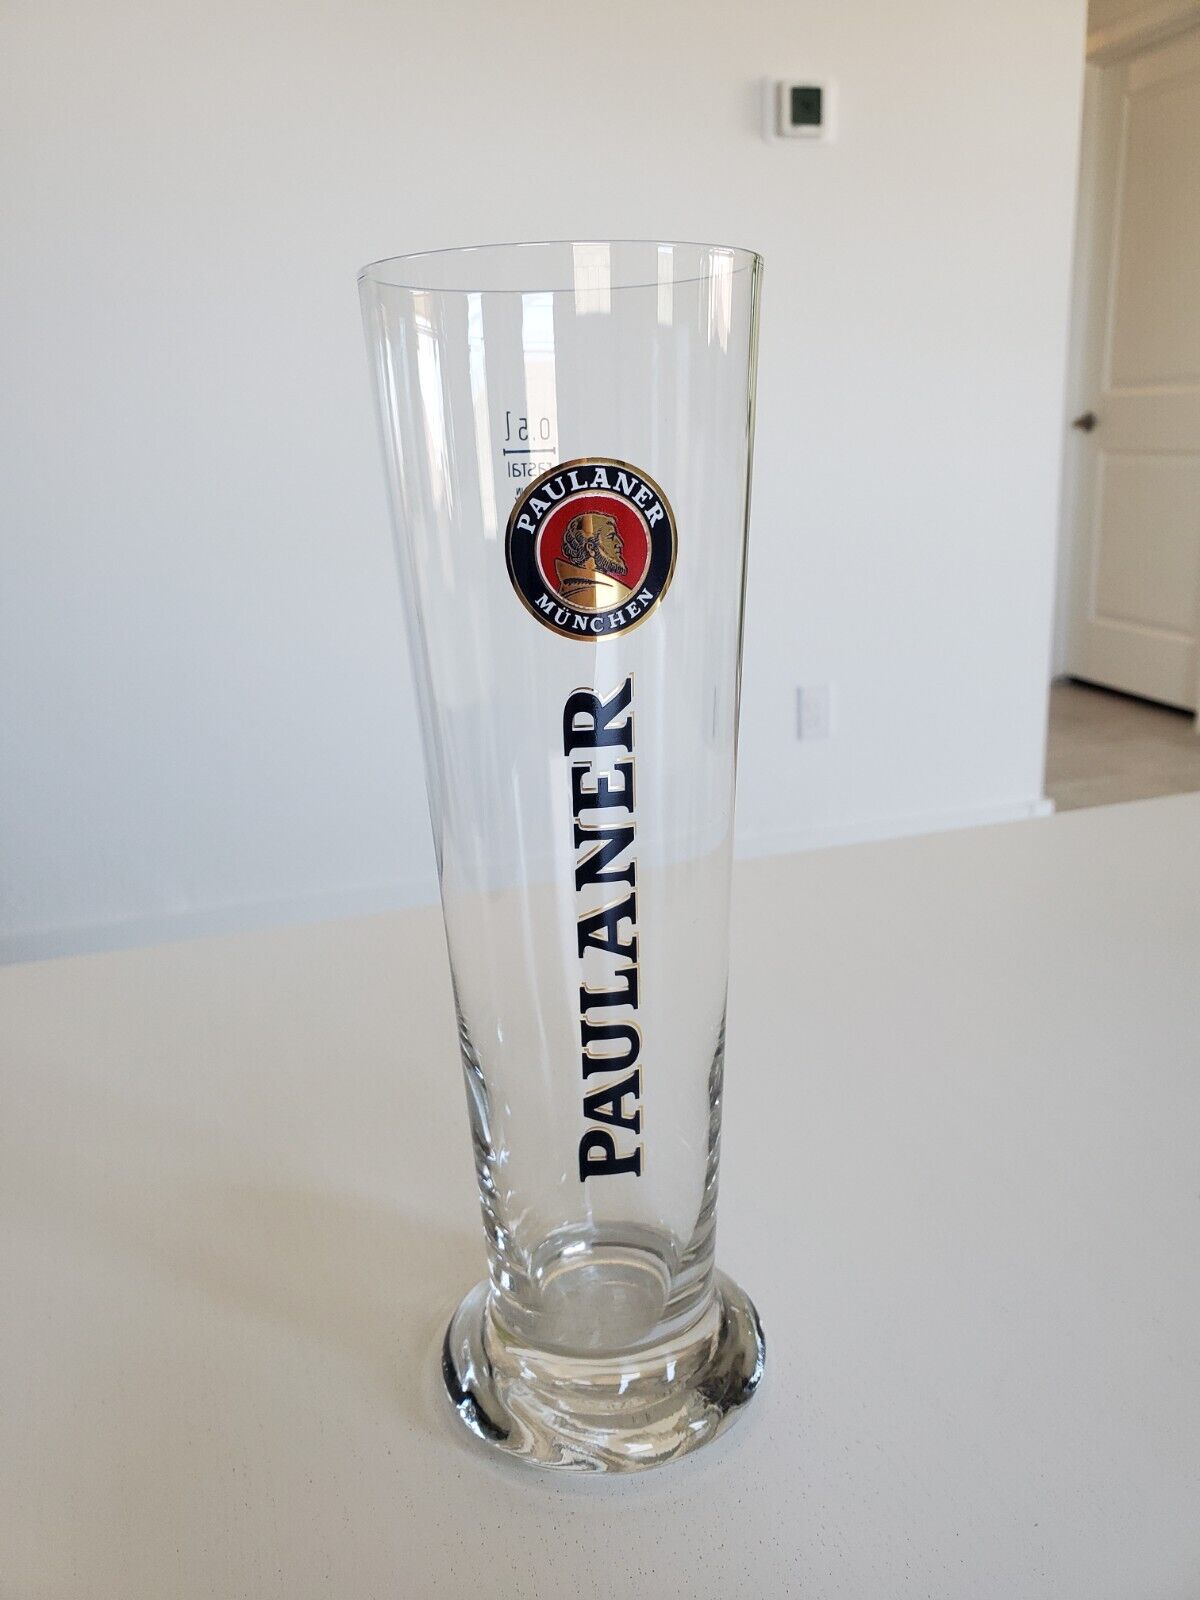 Paulaner Weissbier Weizen style Beer Glass 0.5 L Made in Germany